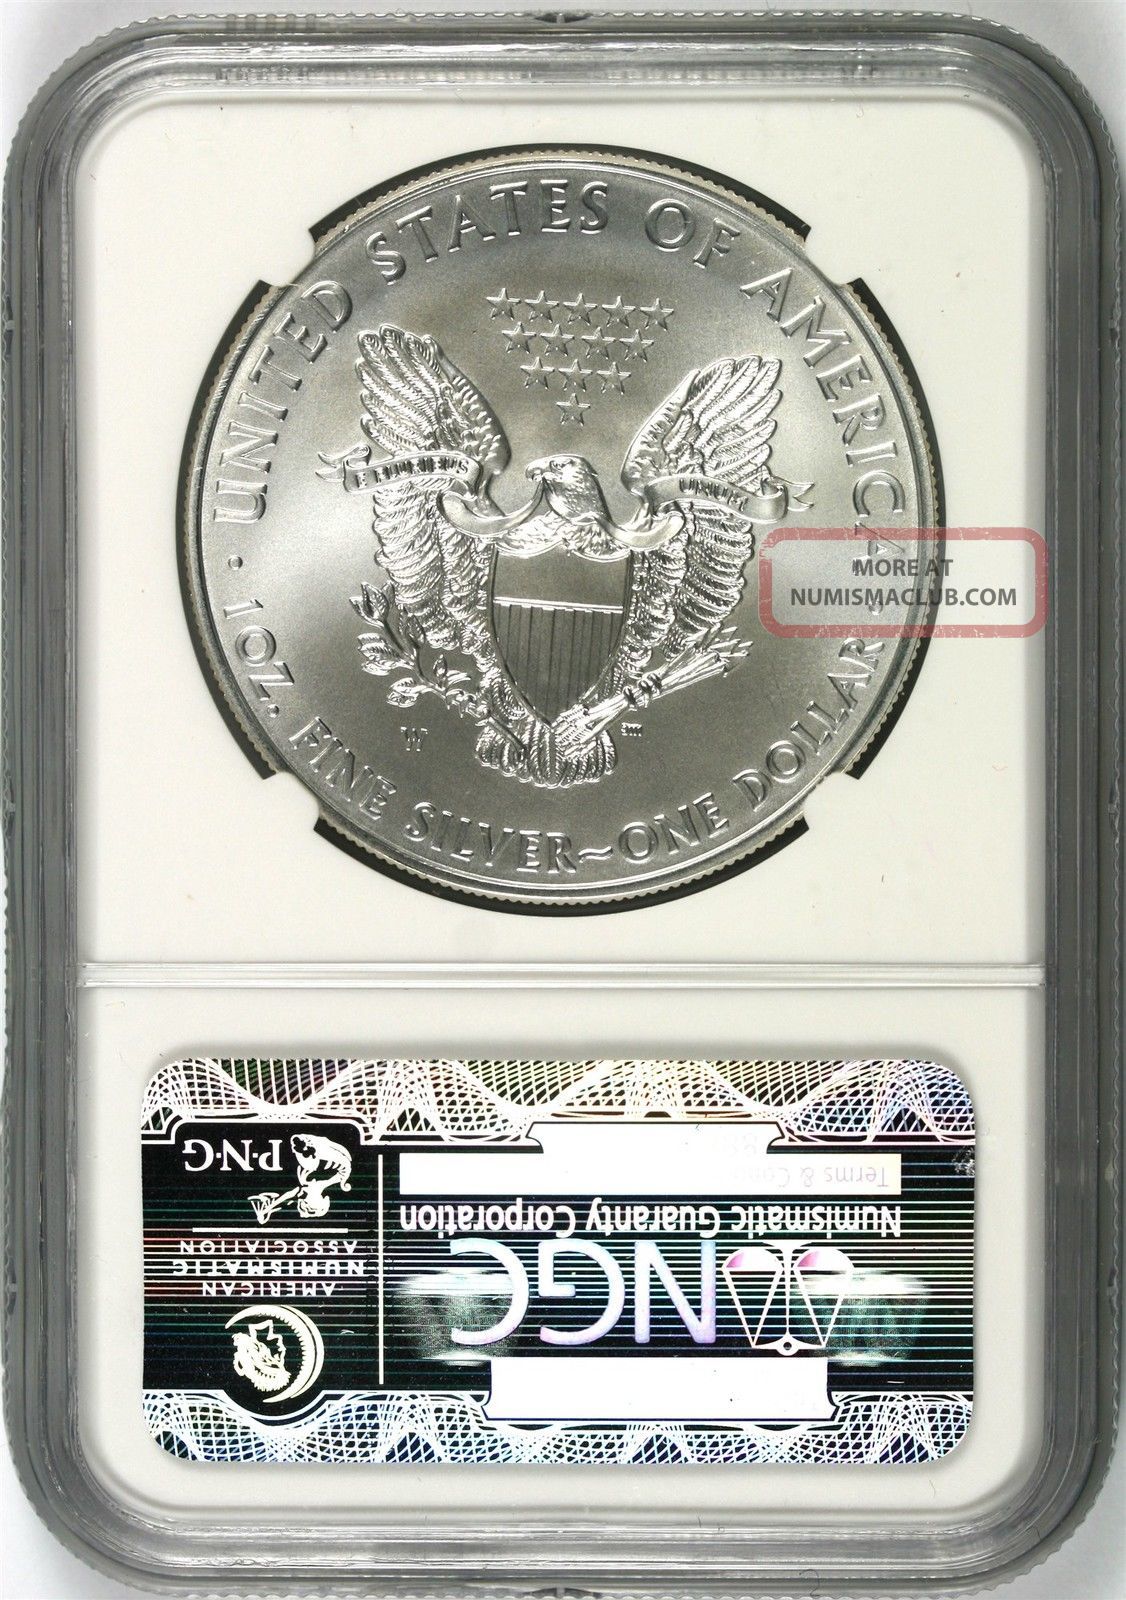 2011 - W Silver American Eagle $1 Ngc Ms70 Eagle 25th Anniversary